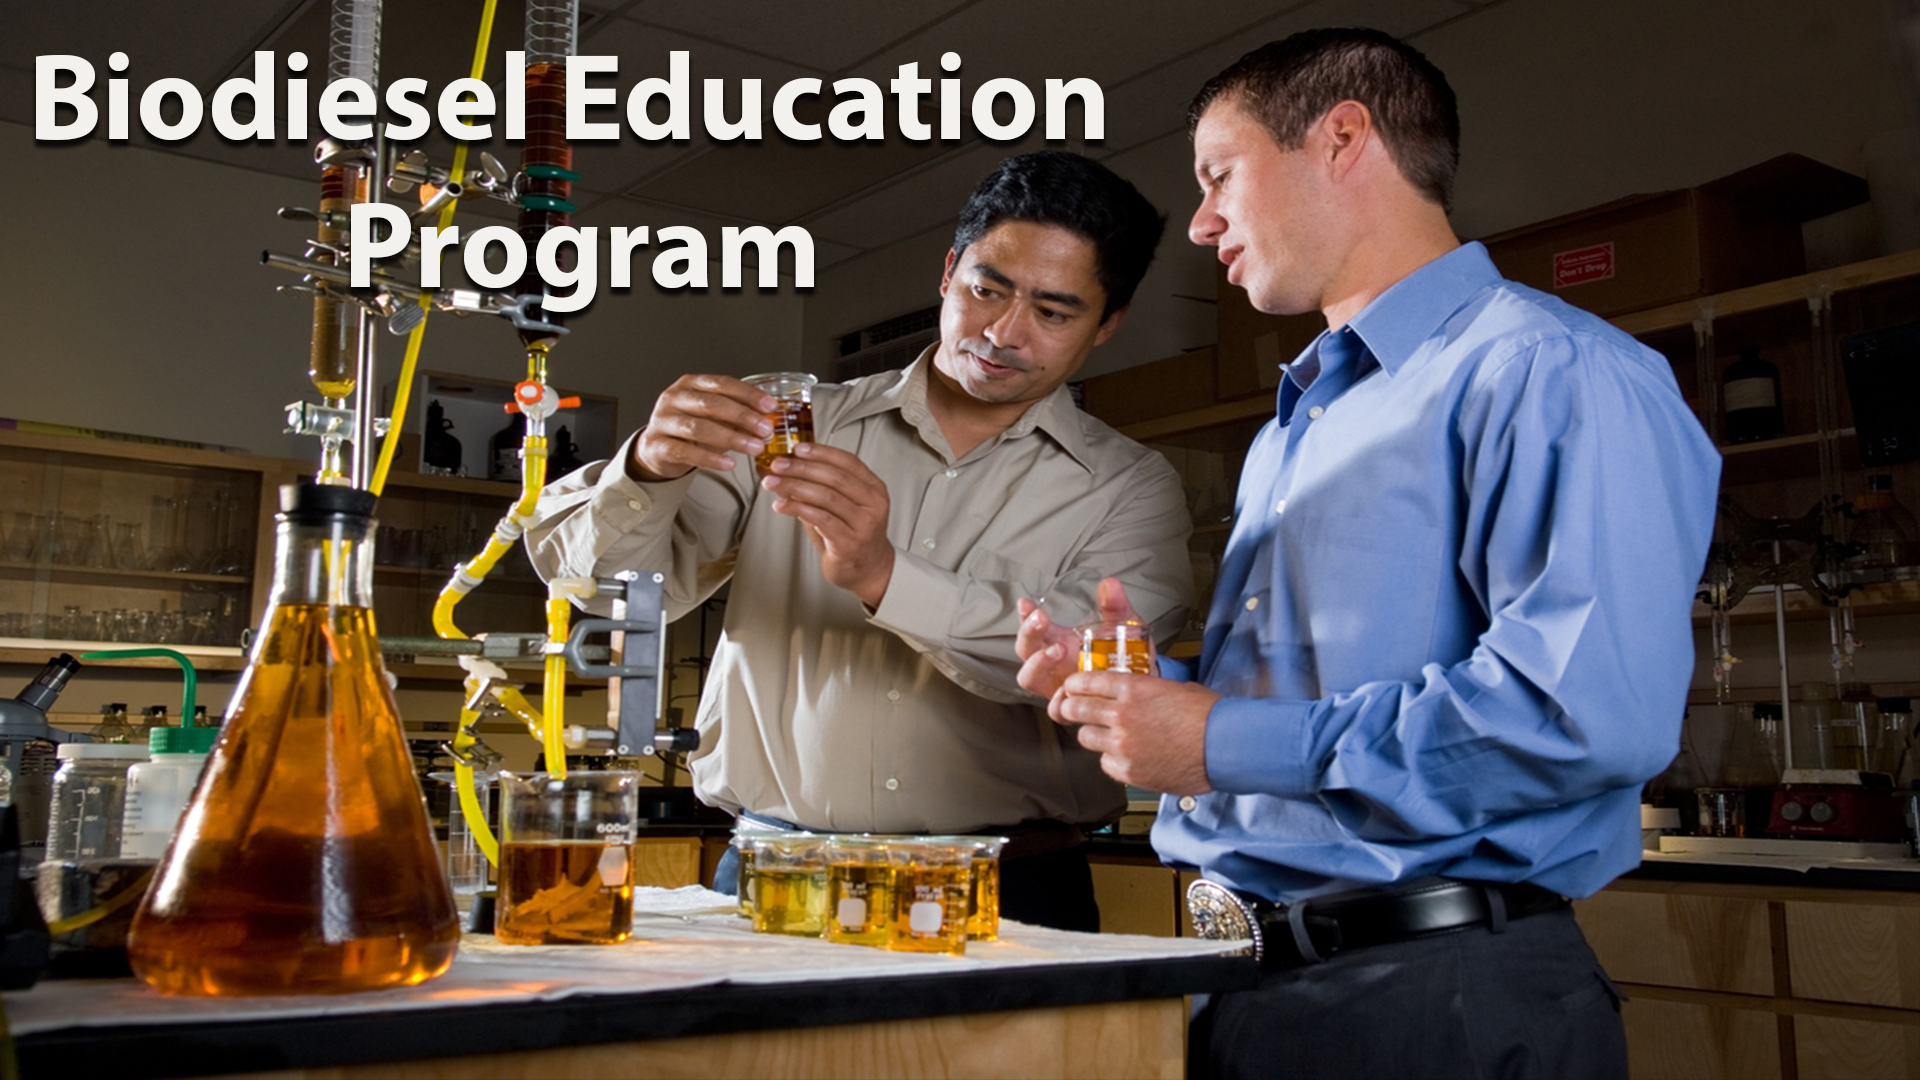 Biodiesel Education Program